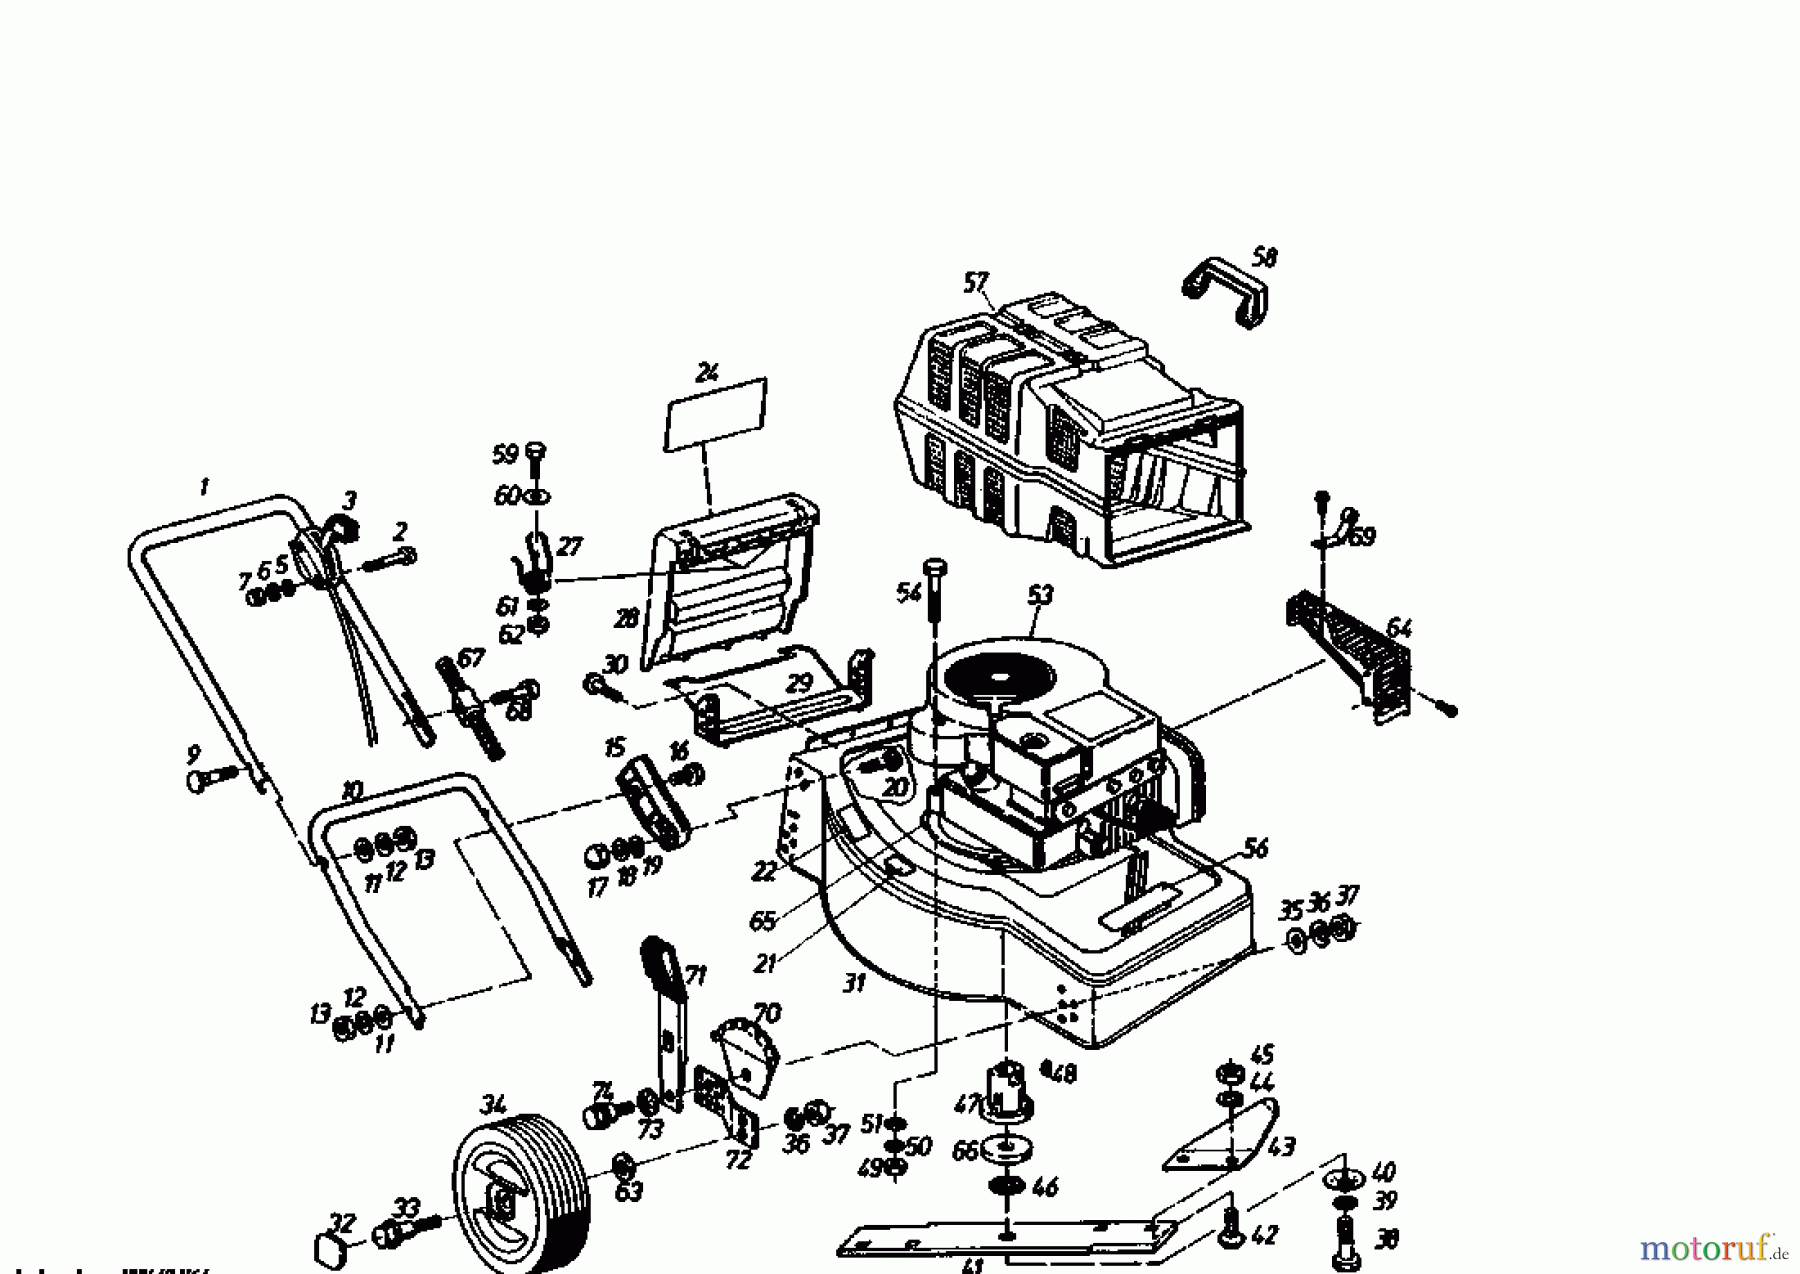  Golf Petrol mower Golf HB-BS 02880.05  (1987) Basic machine